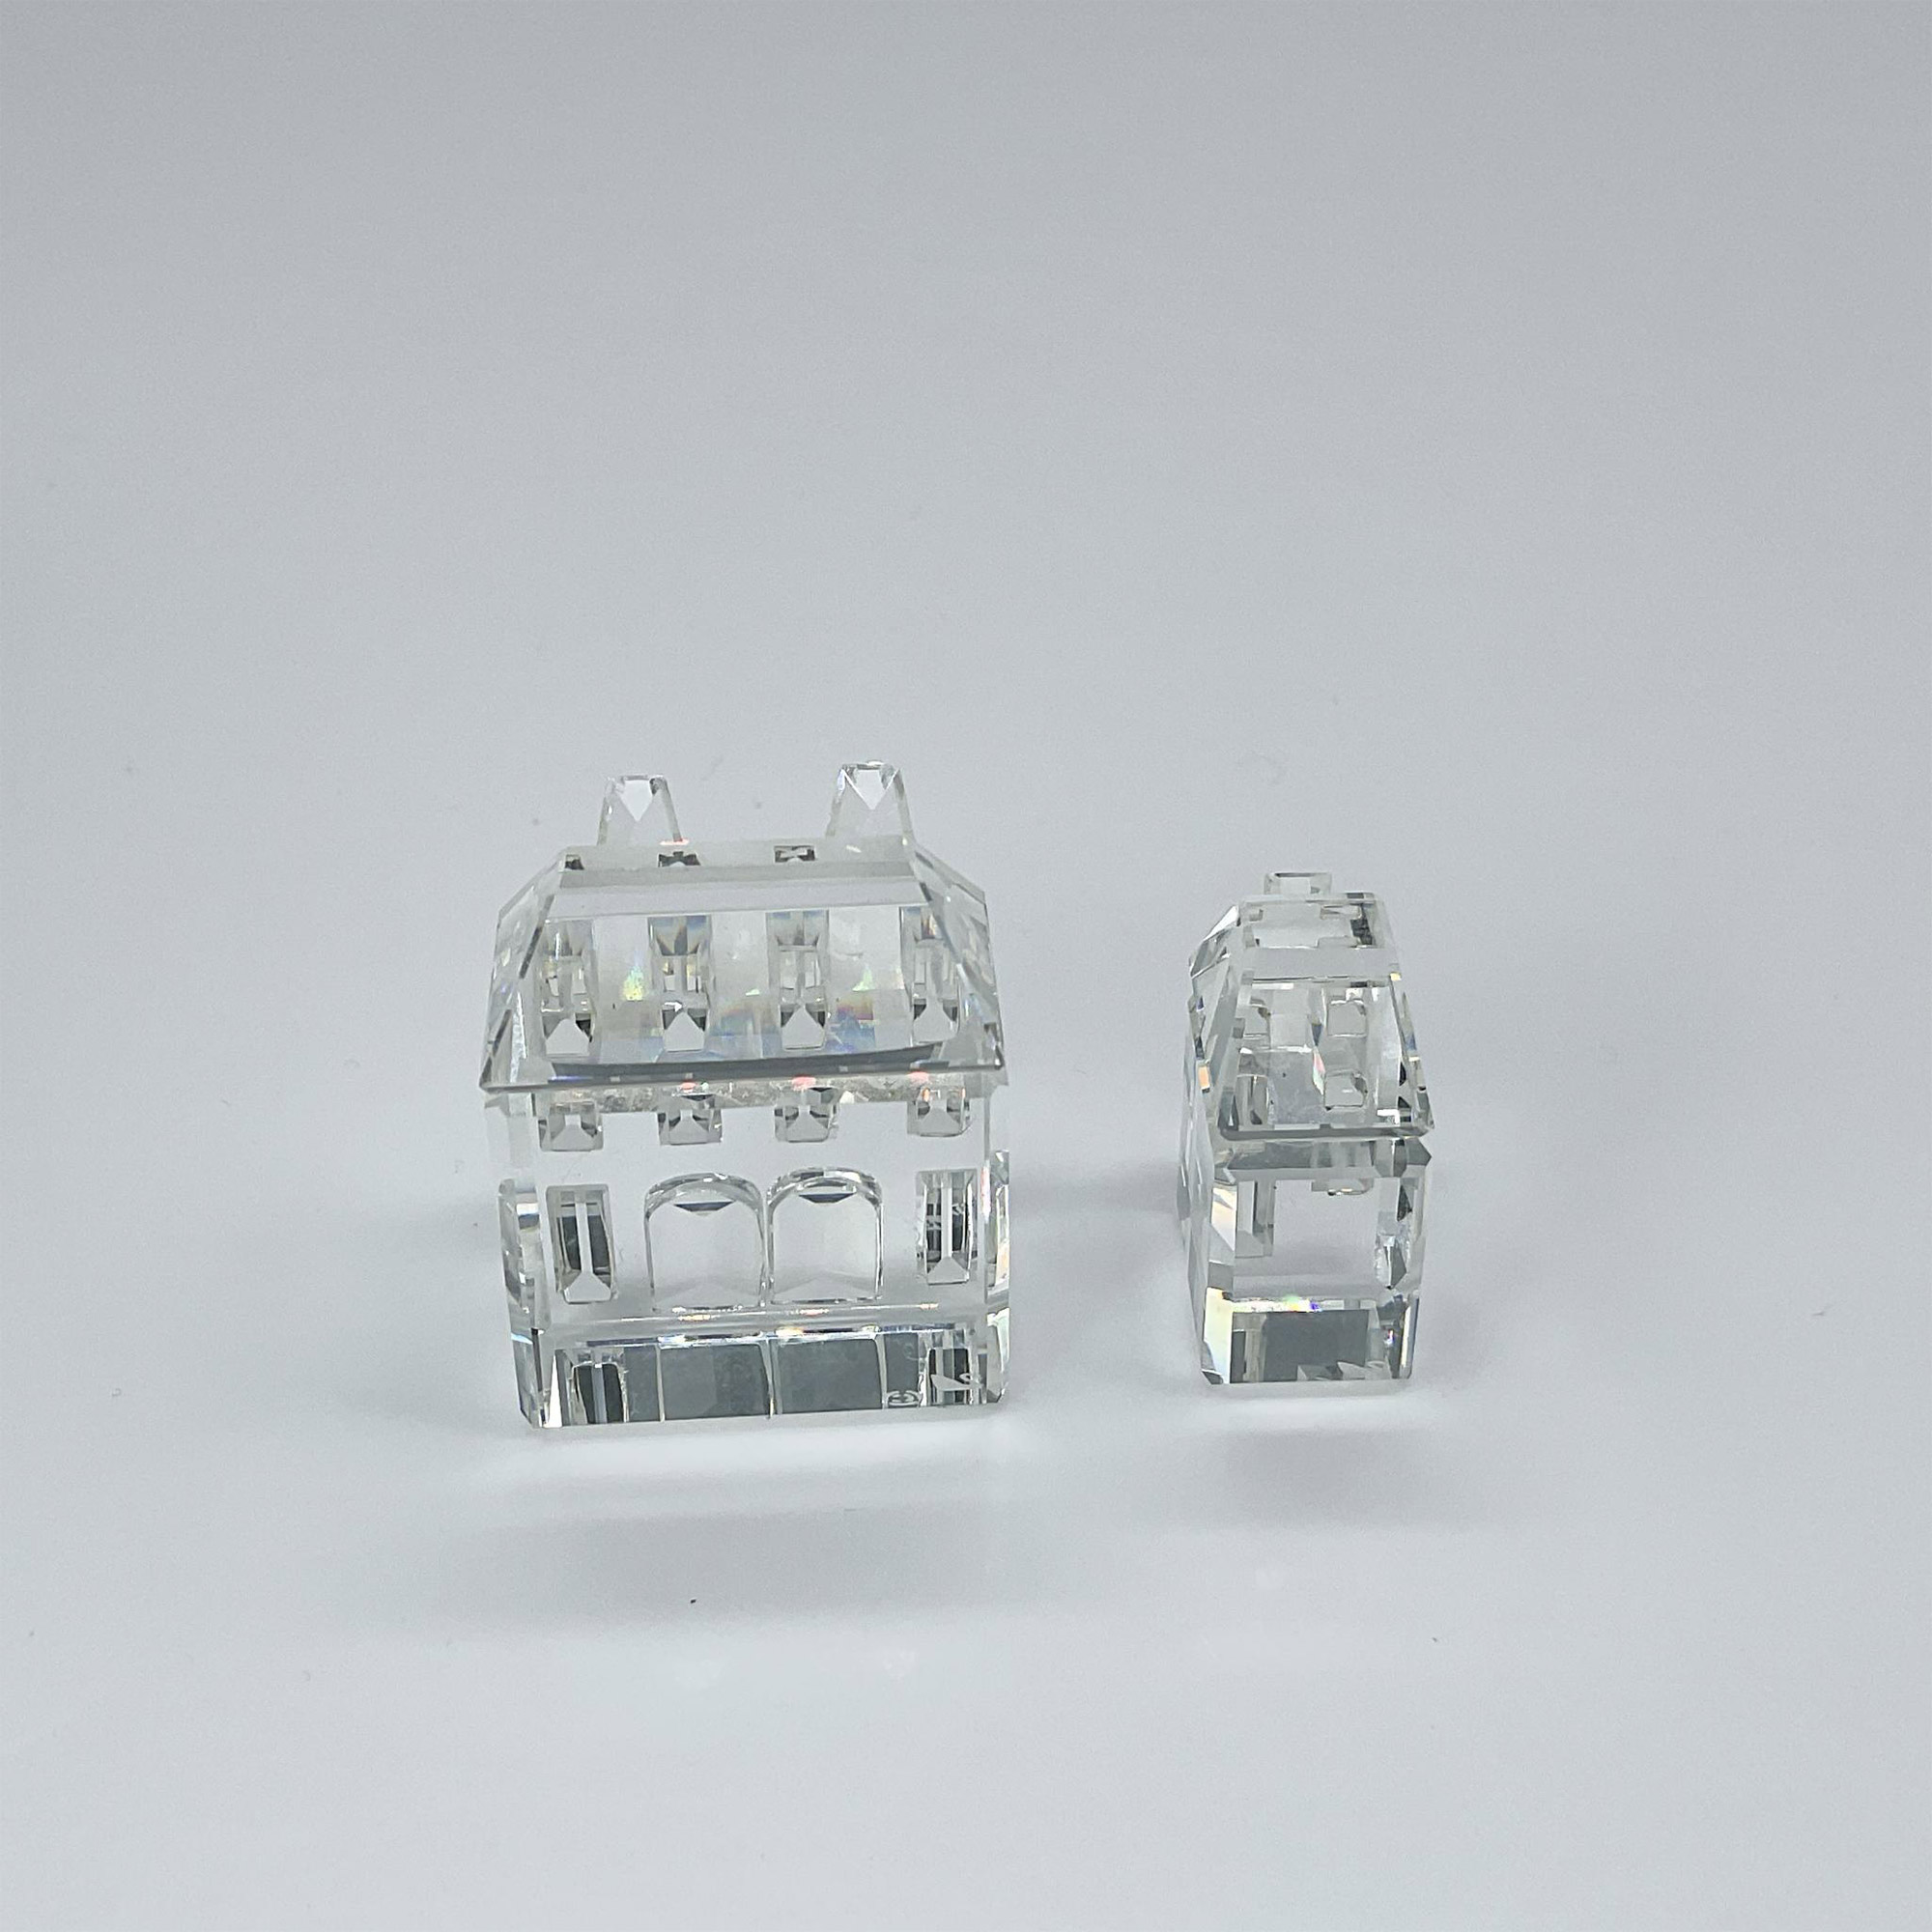 2pc Swarovski Silver Crystal Figurines, City Houses - Image 2 of 4